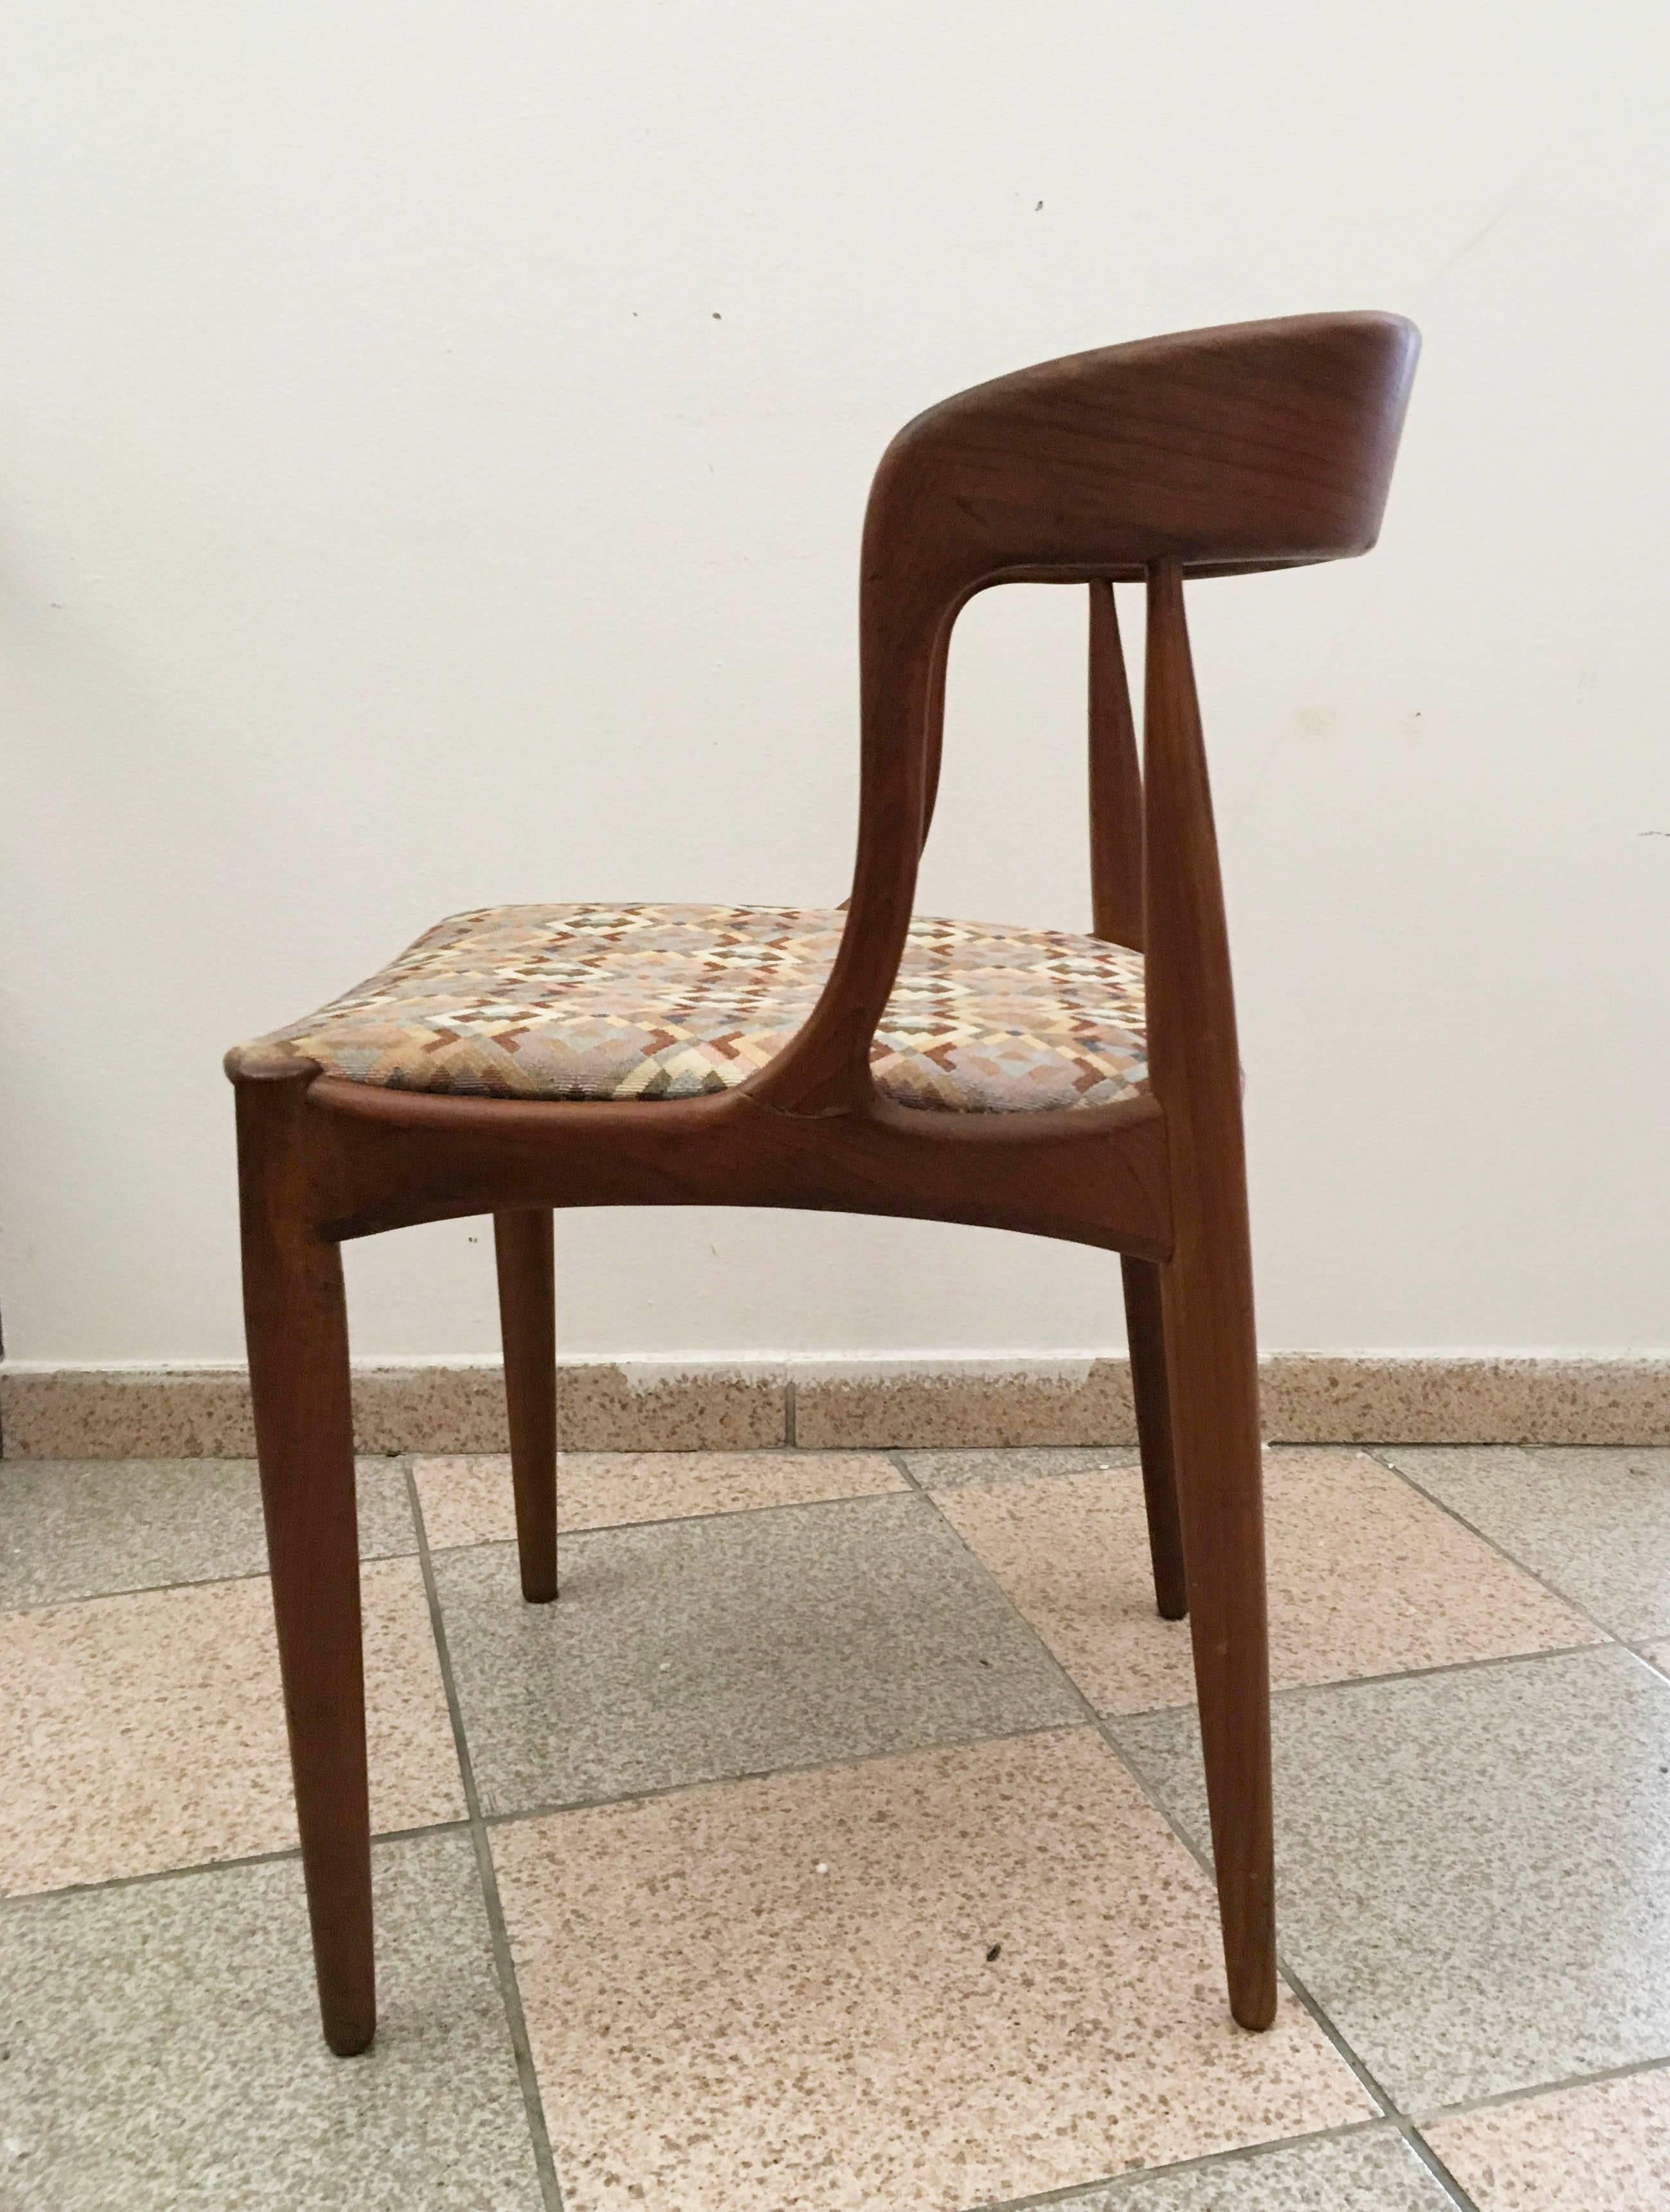 Set of Four Dining Chairs by Johannes Andersen for Uldum Møbelfabrik (Dänisch)